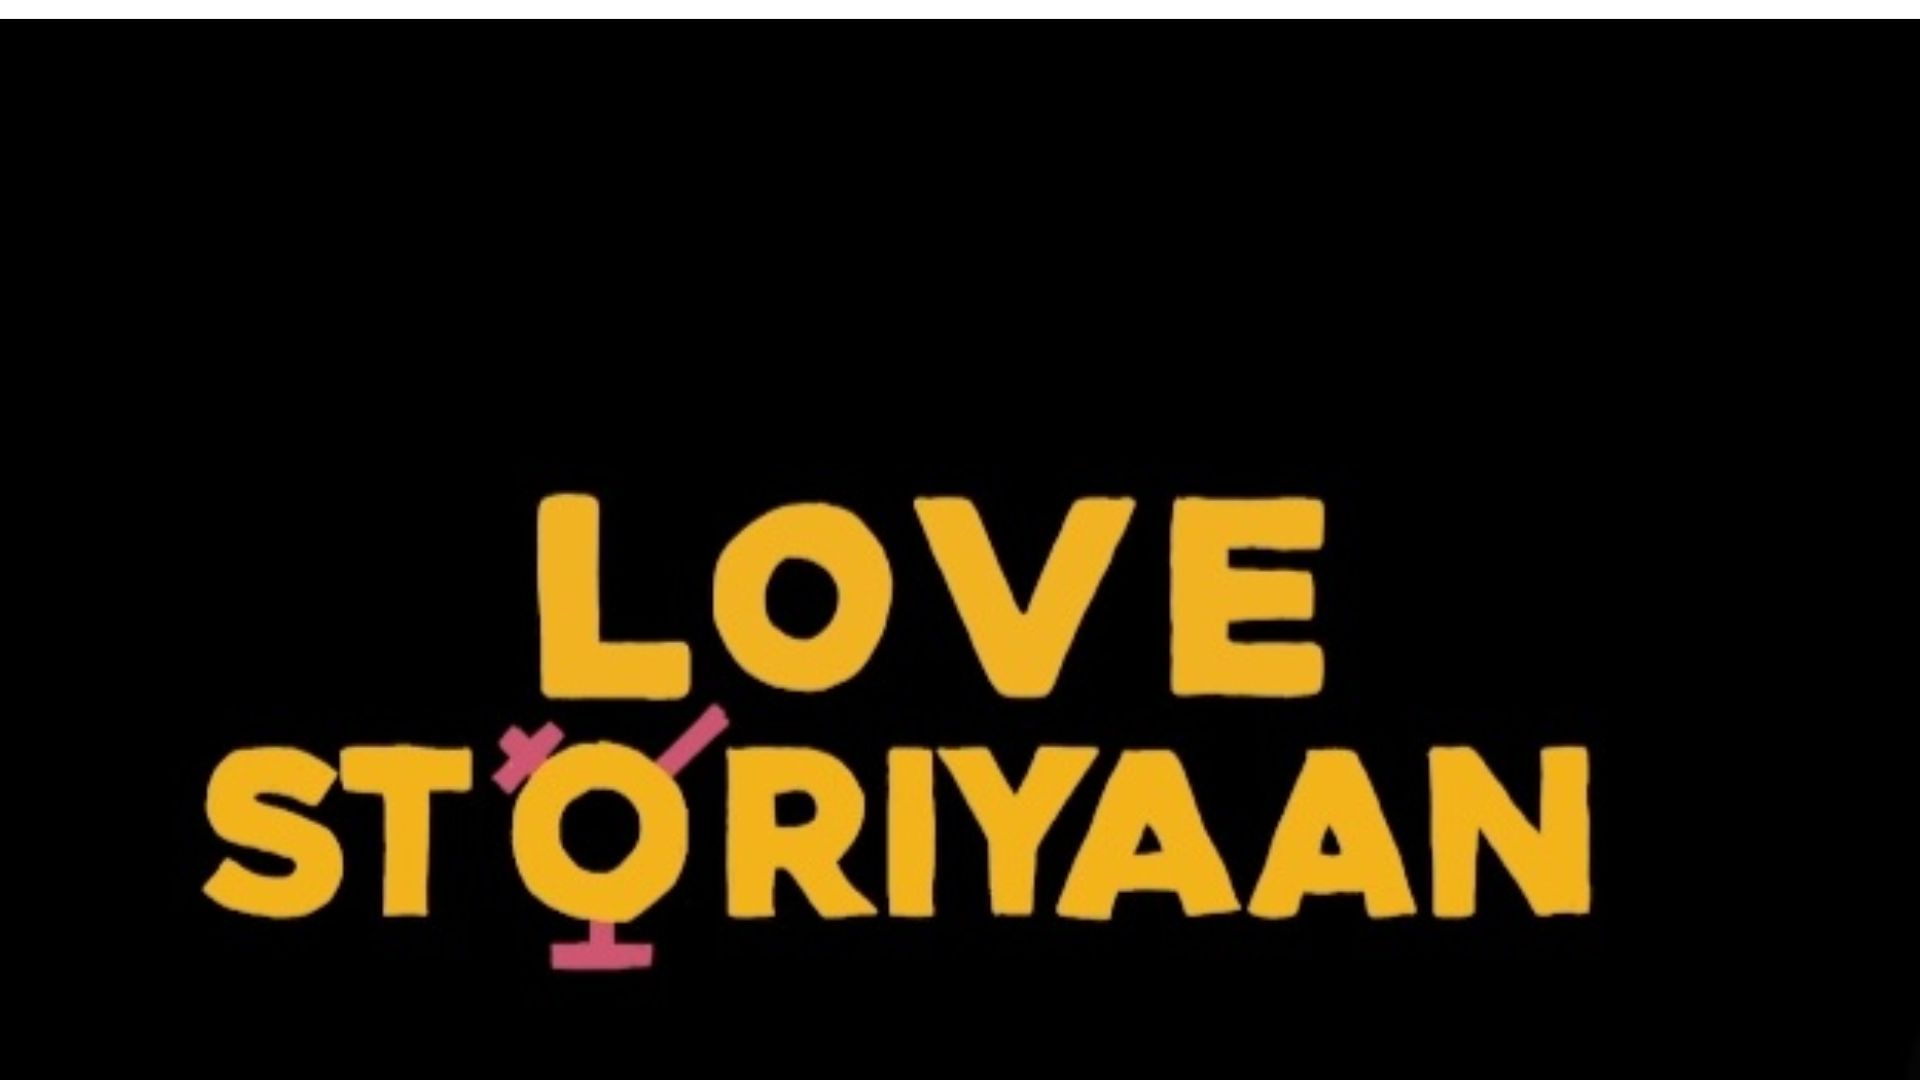 Trailer of series ‘Love Storiyaan’ unveiled